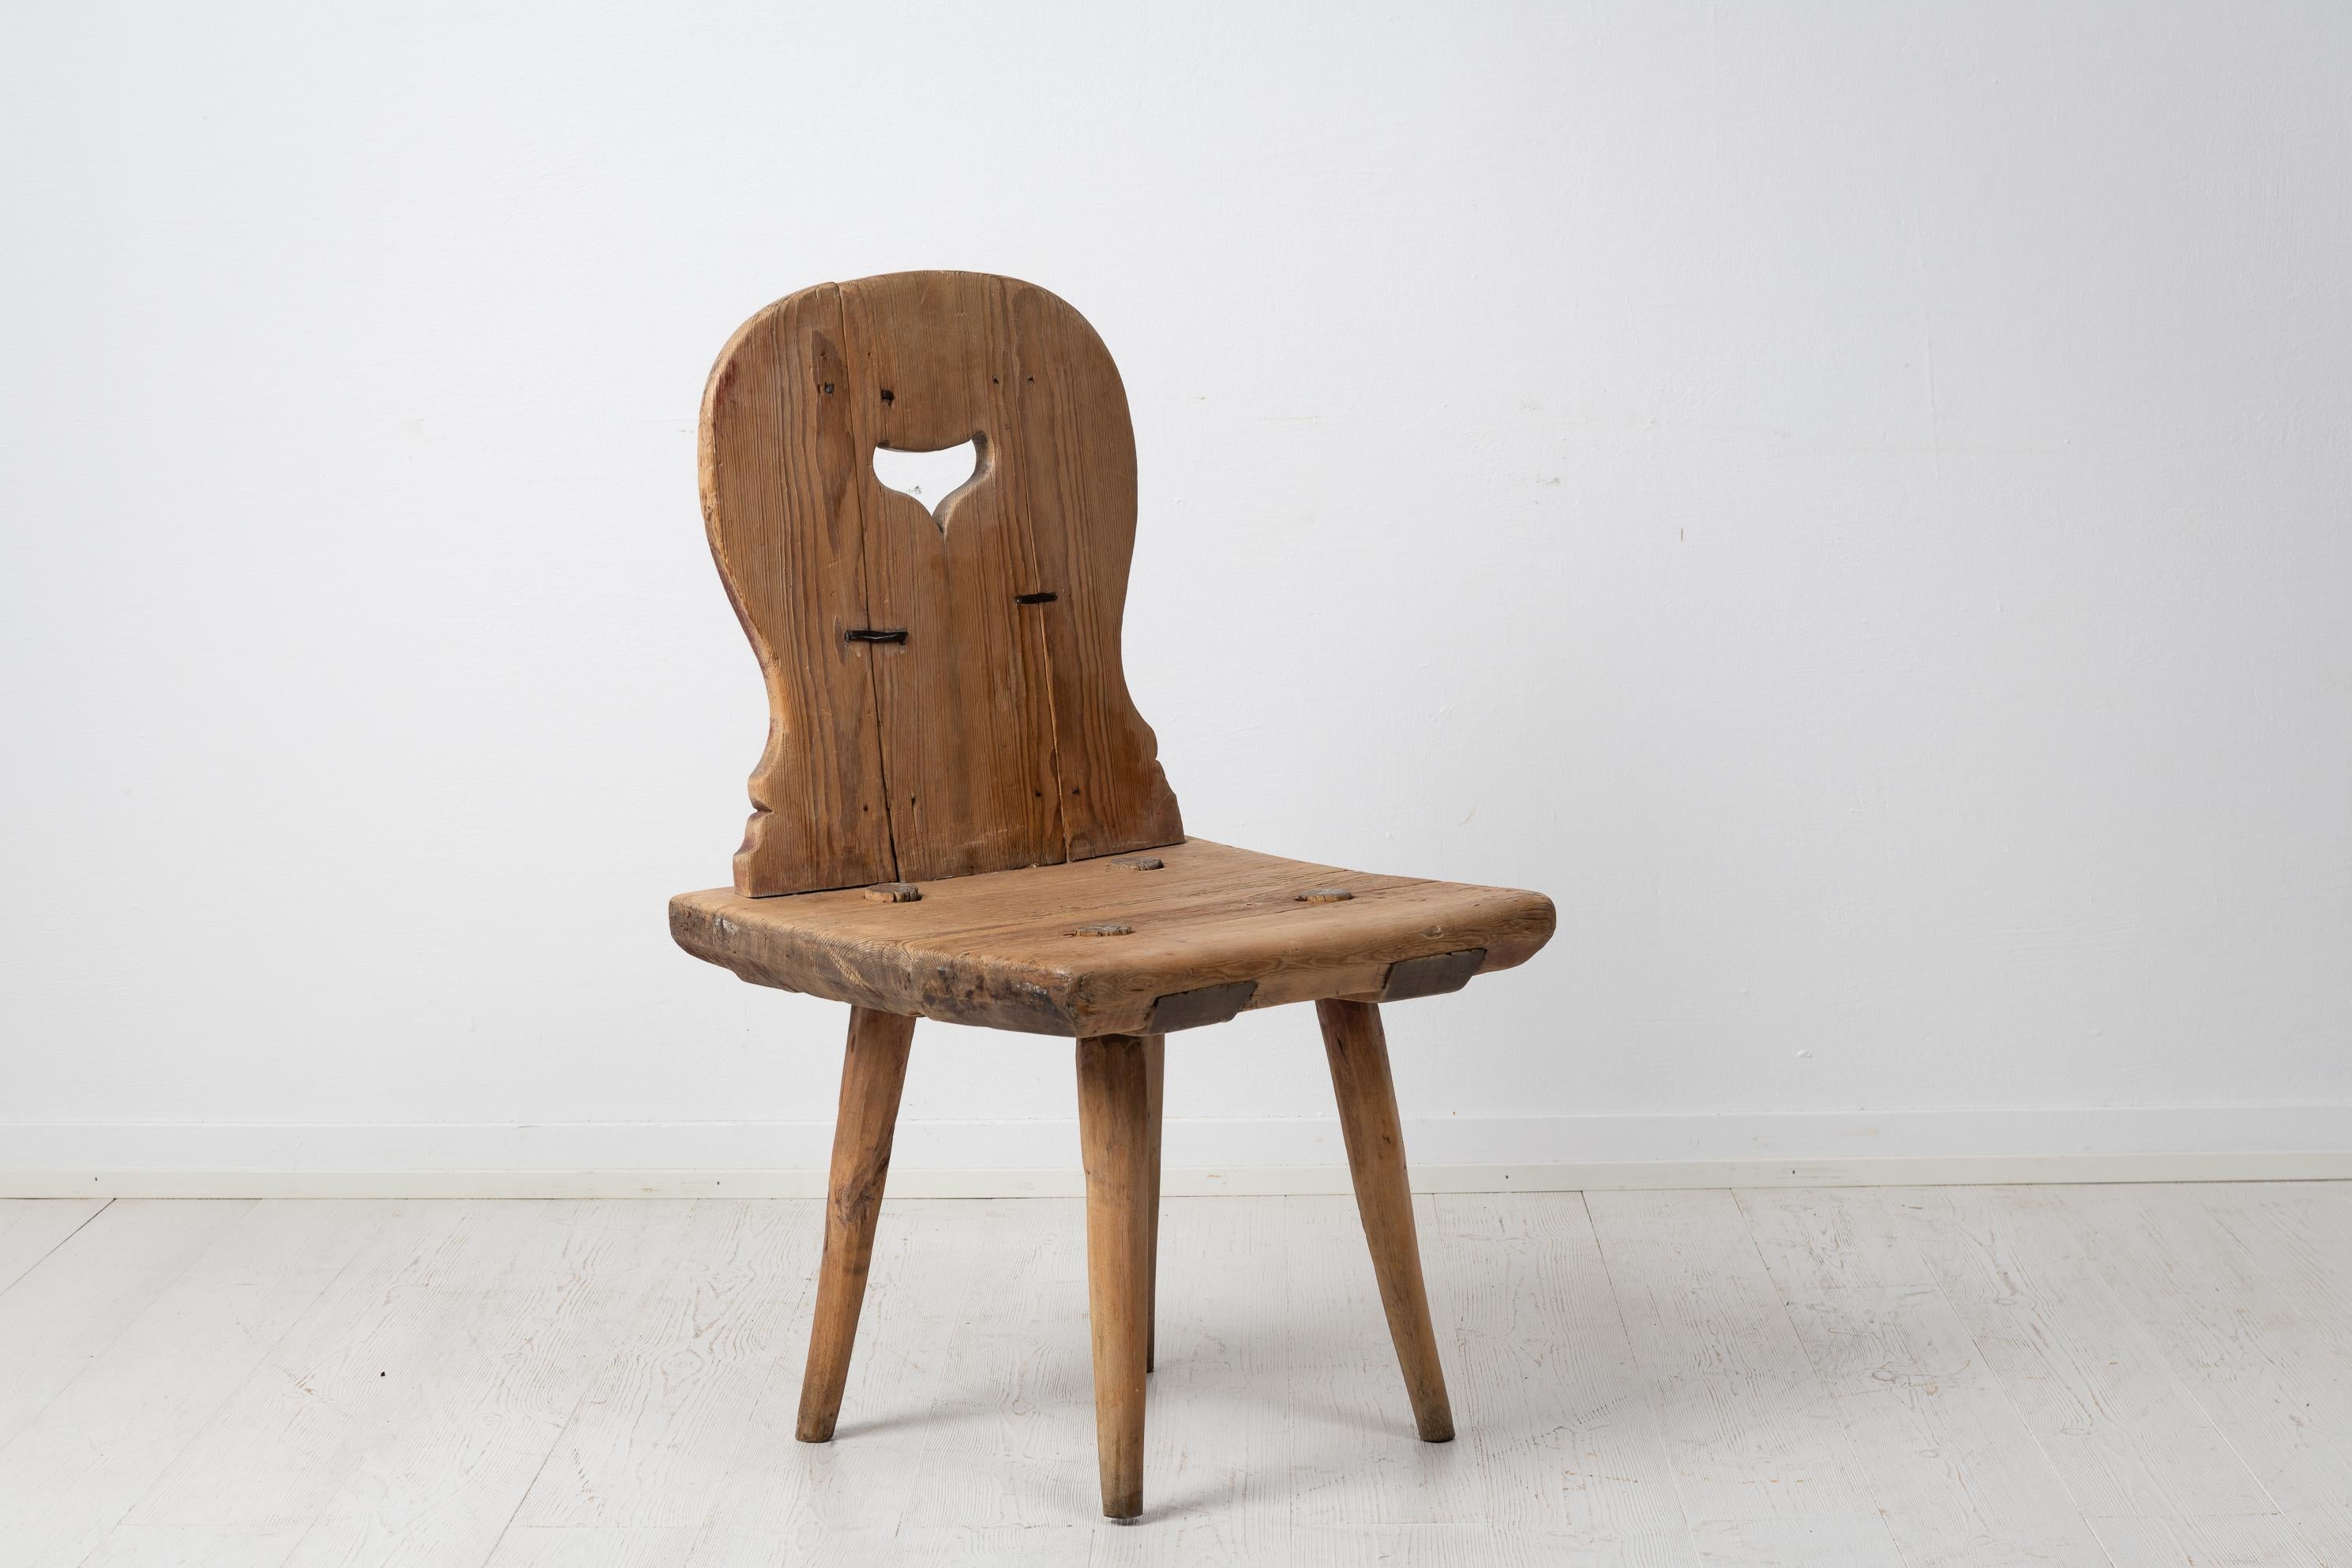 Pine Swedish Rustic Folk Art Primitive Chair For Sale